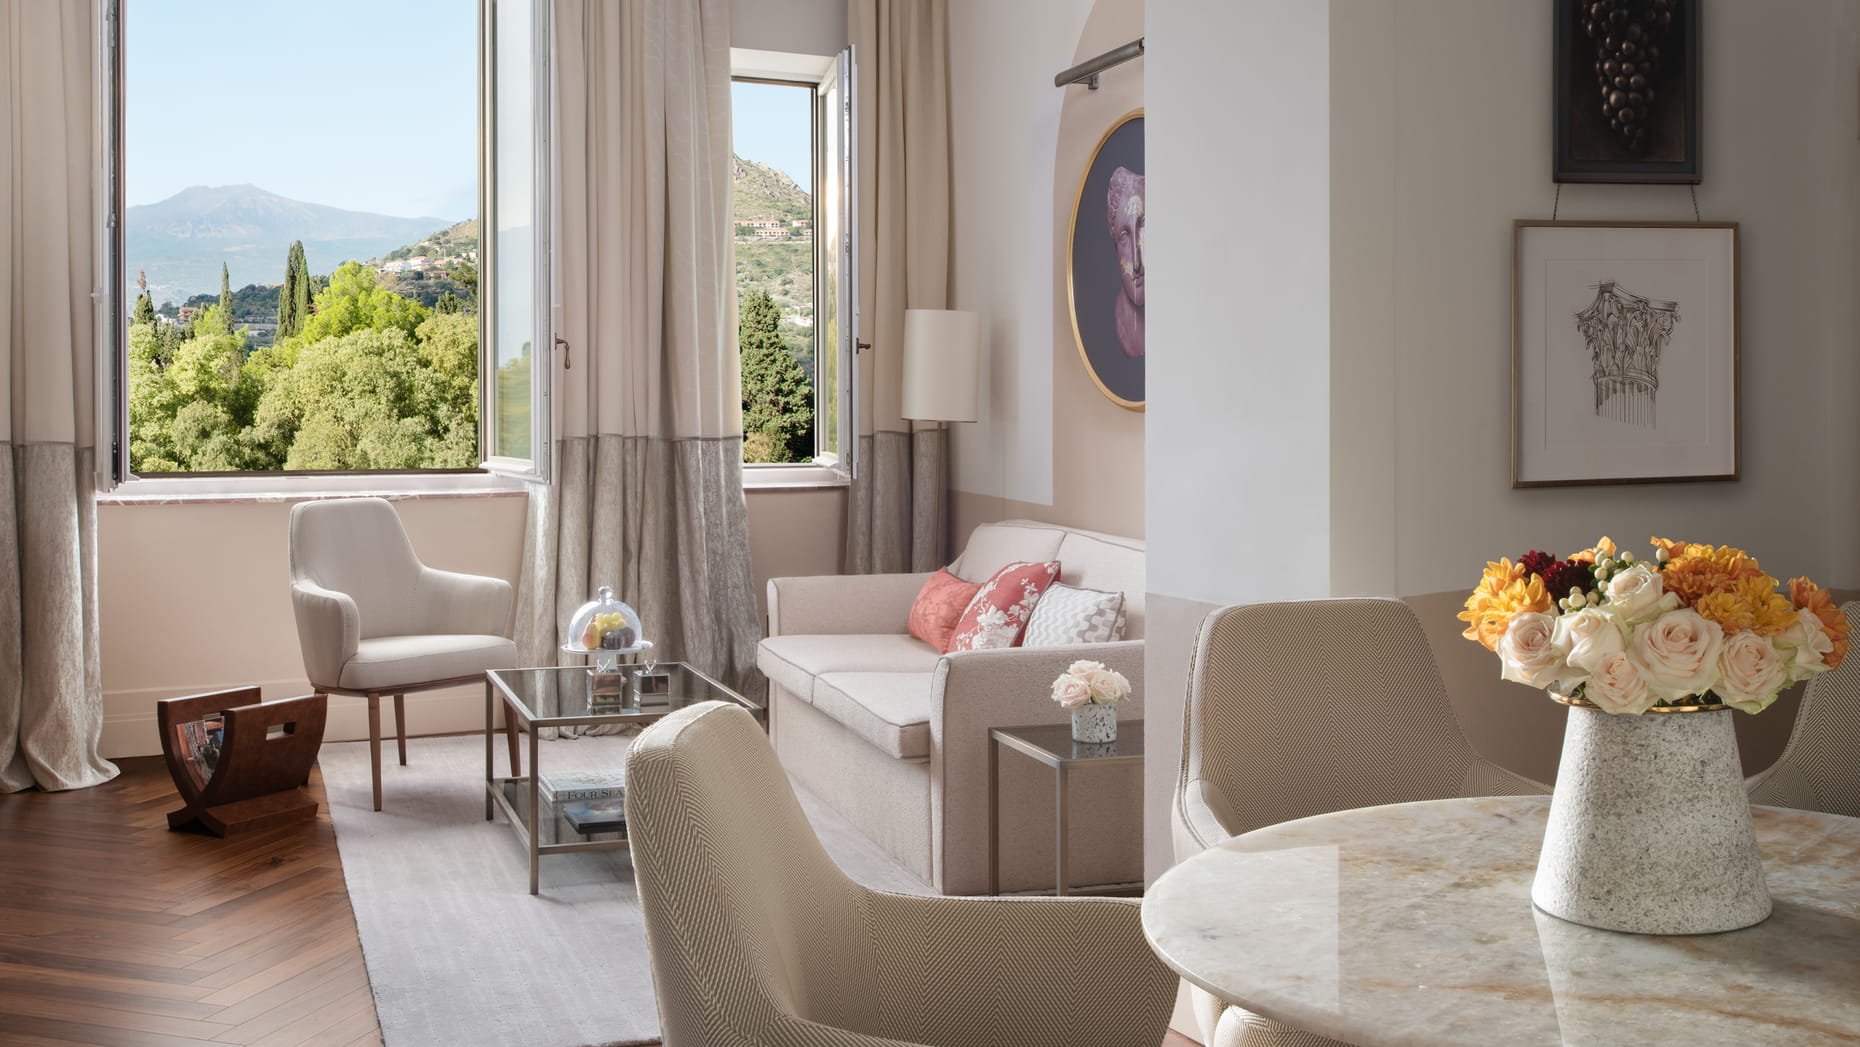 Etna Suite - a modern guest room